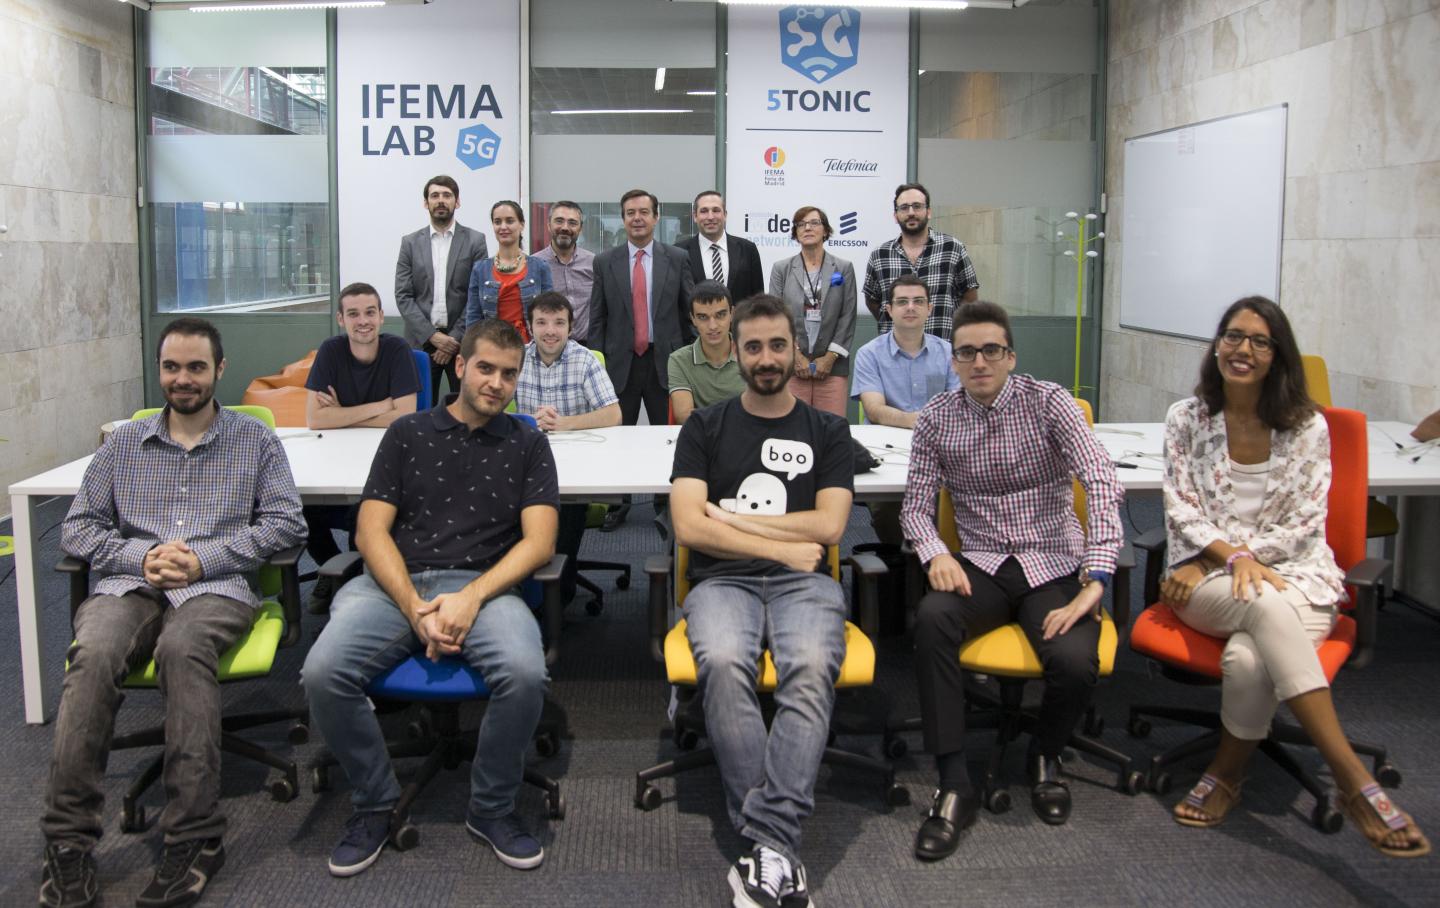 IFEMA 5G LAB Team Presentation